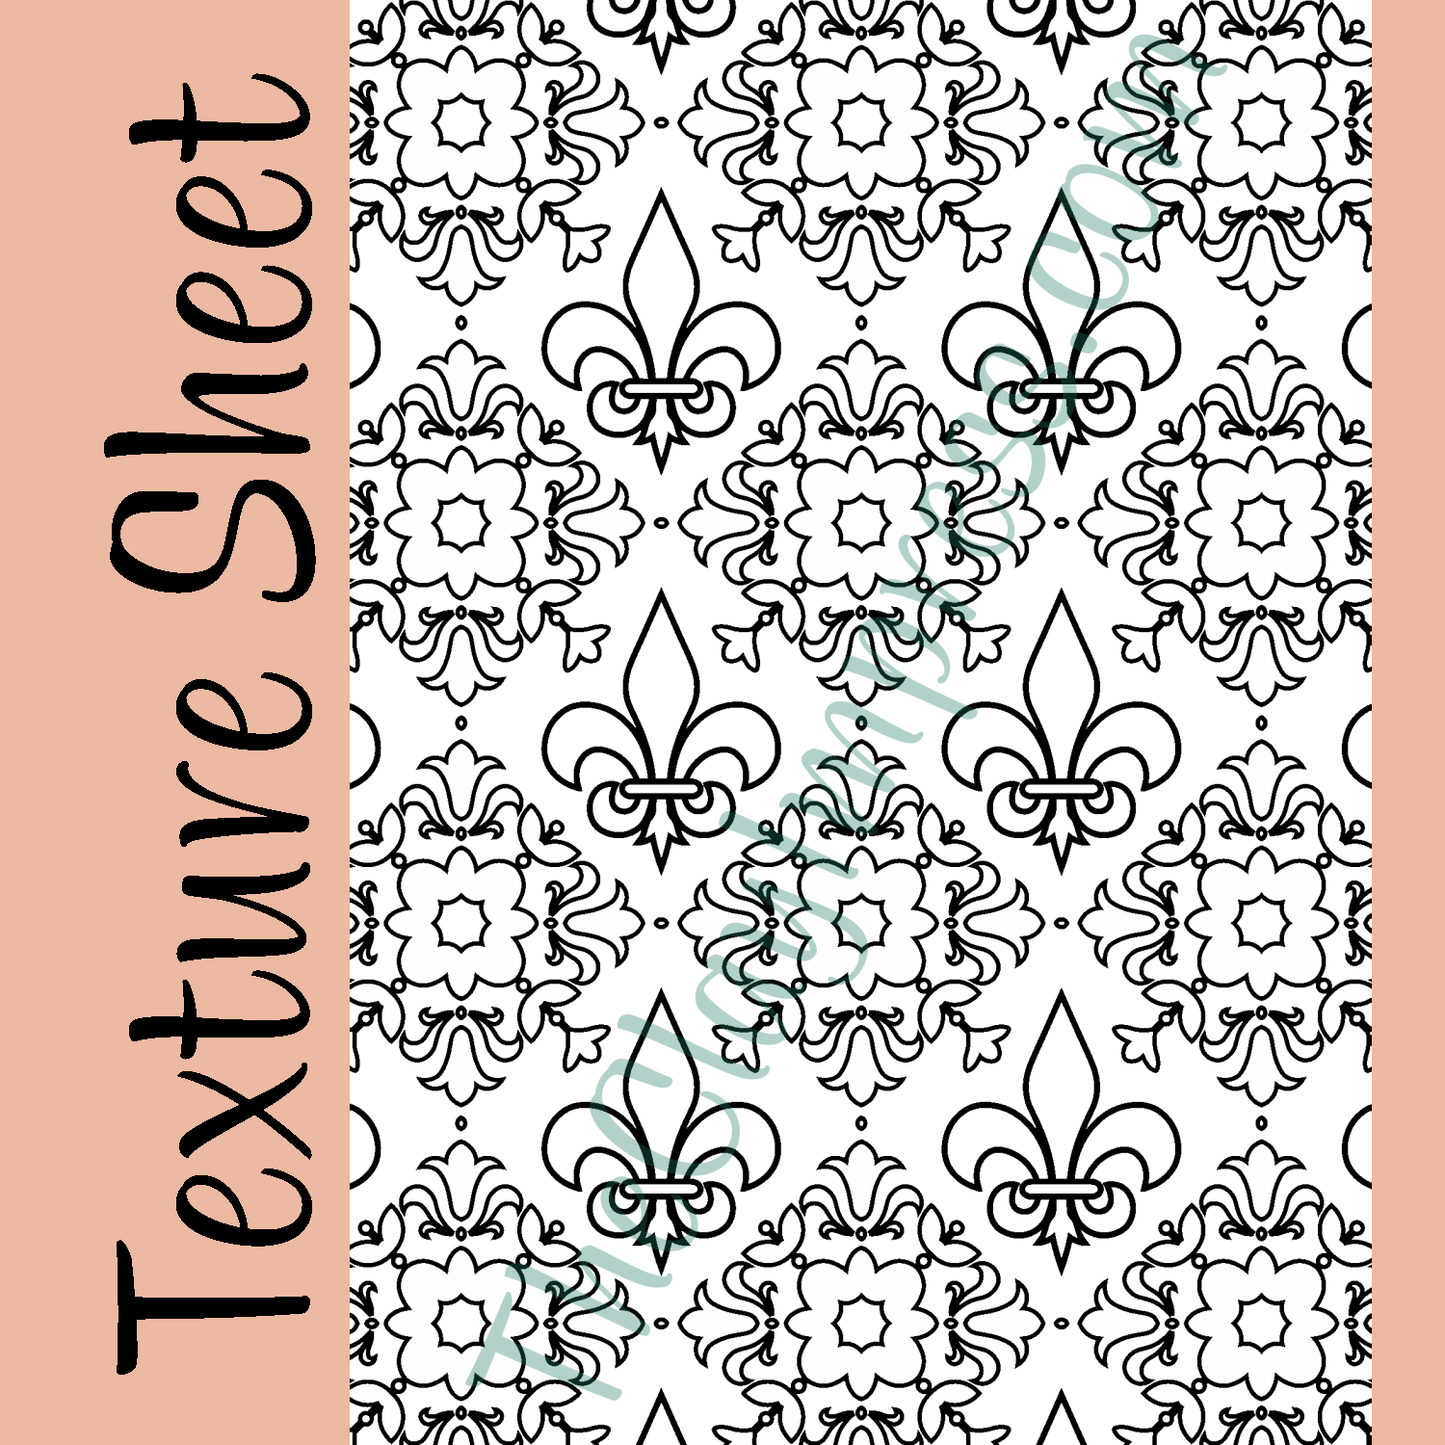 Fleur de Lis Tiles Texture Sheet